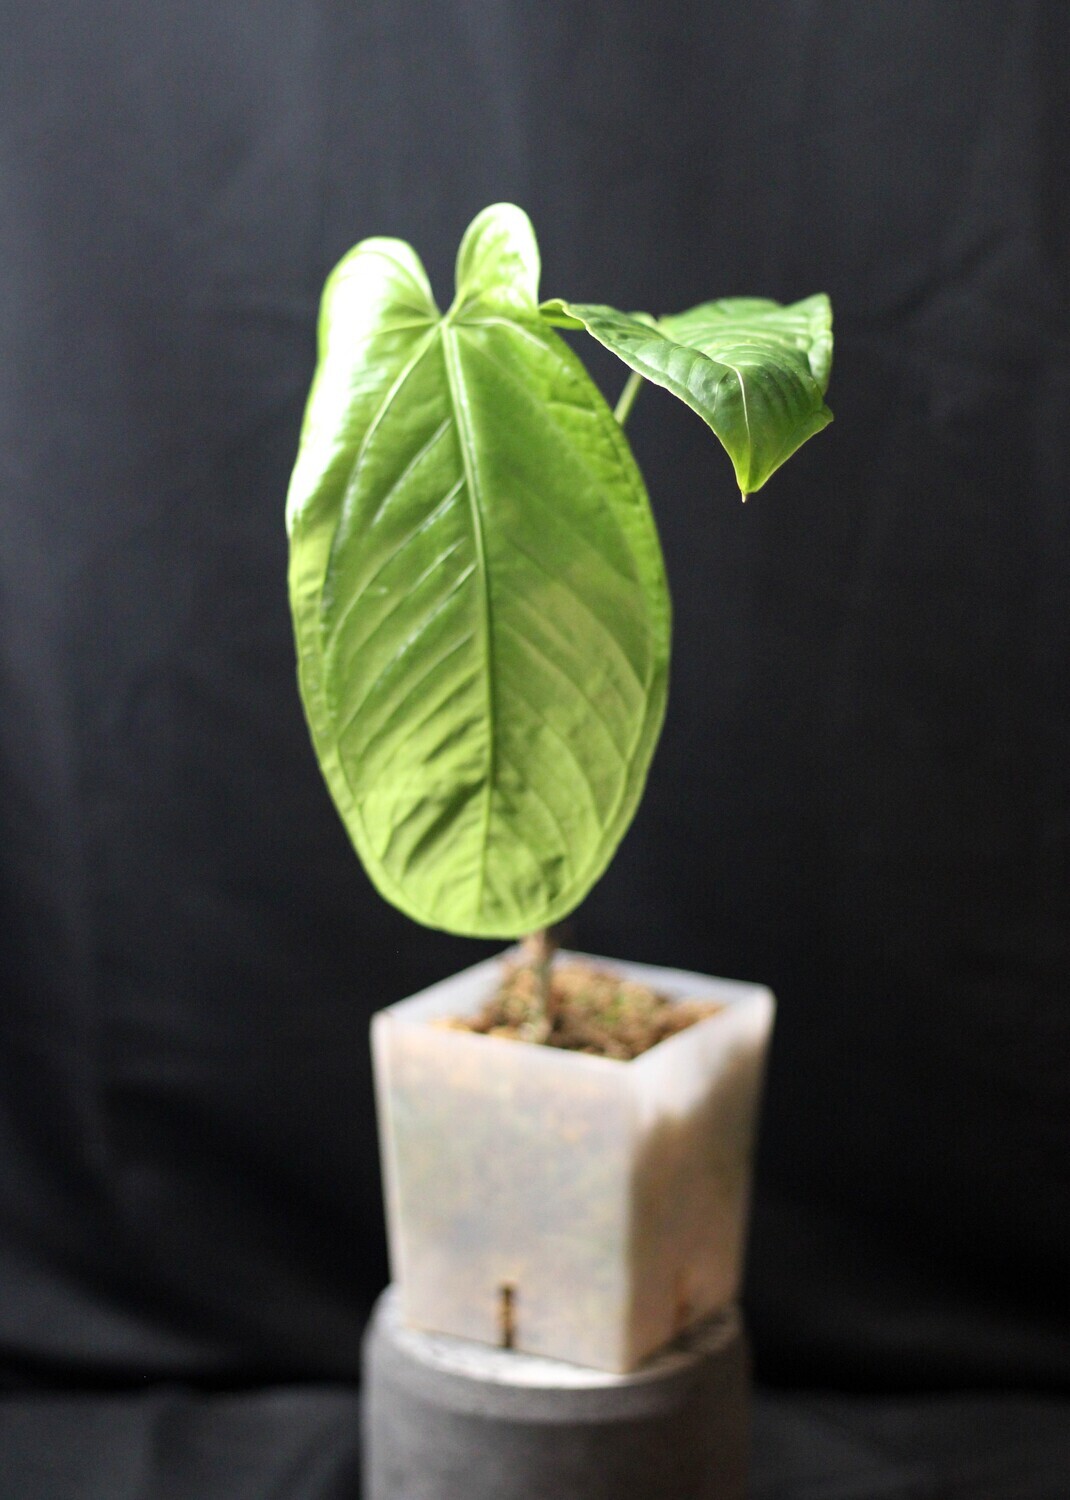 Anthurium Ecuadorensis - A